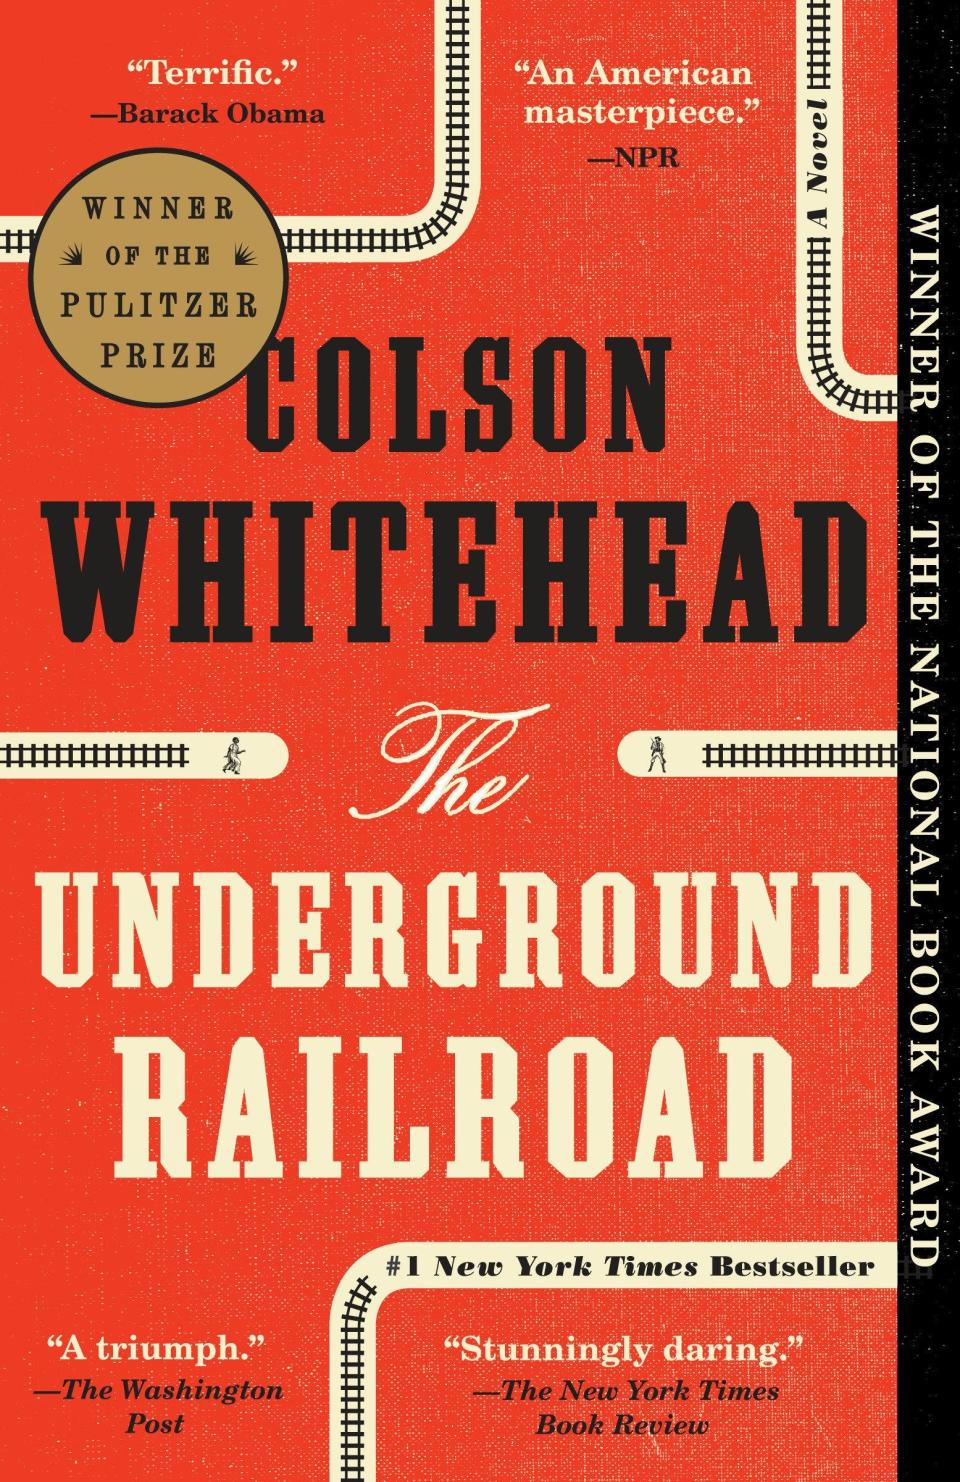 "Underground Railroad" book cover